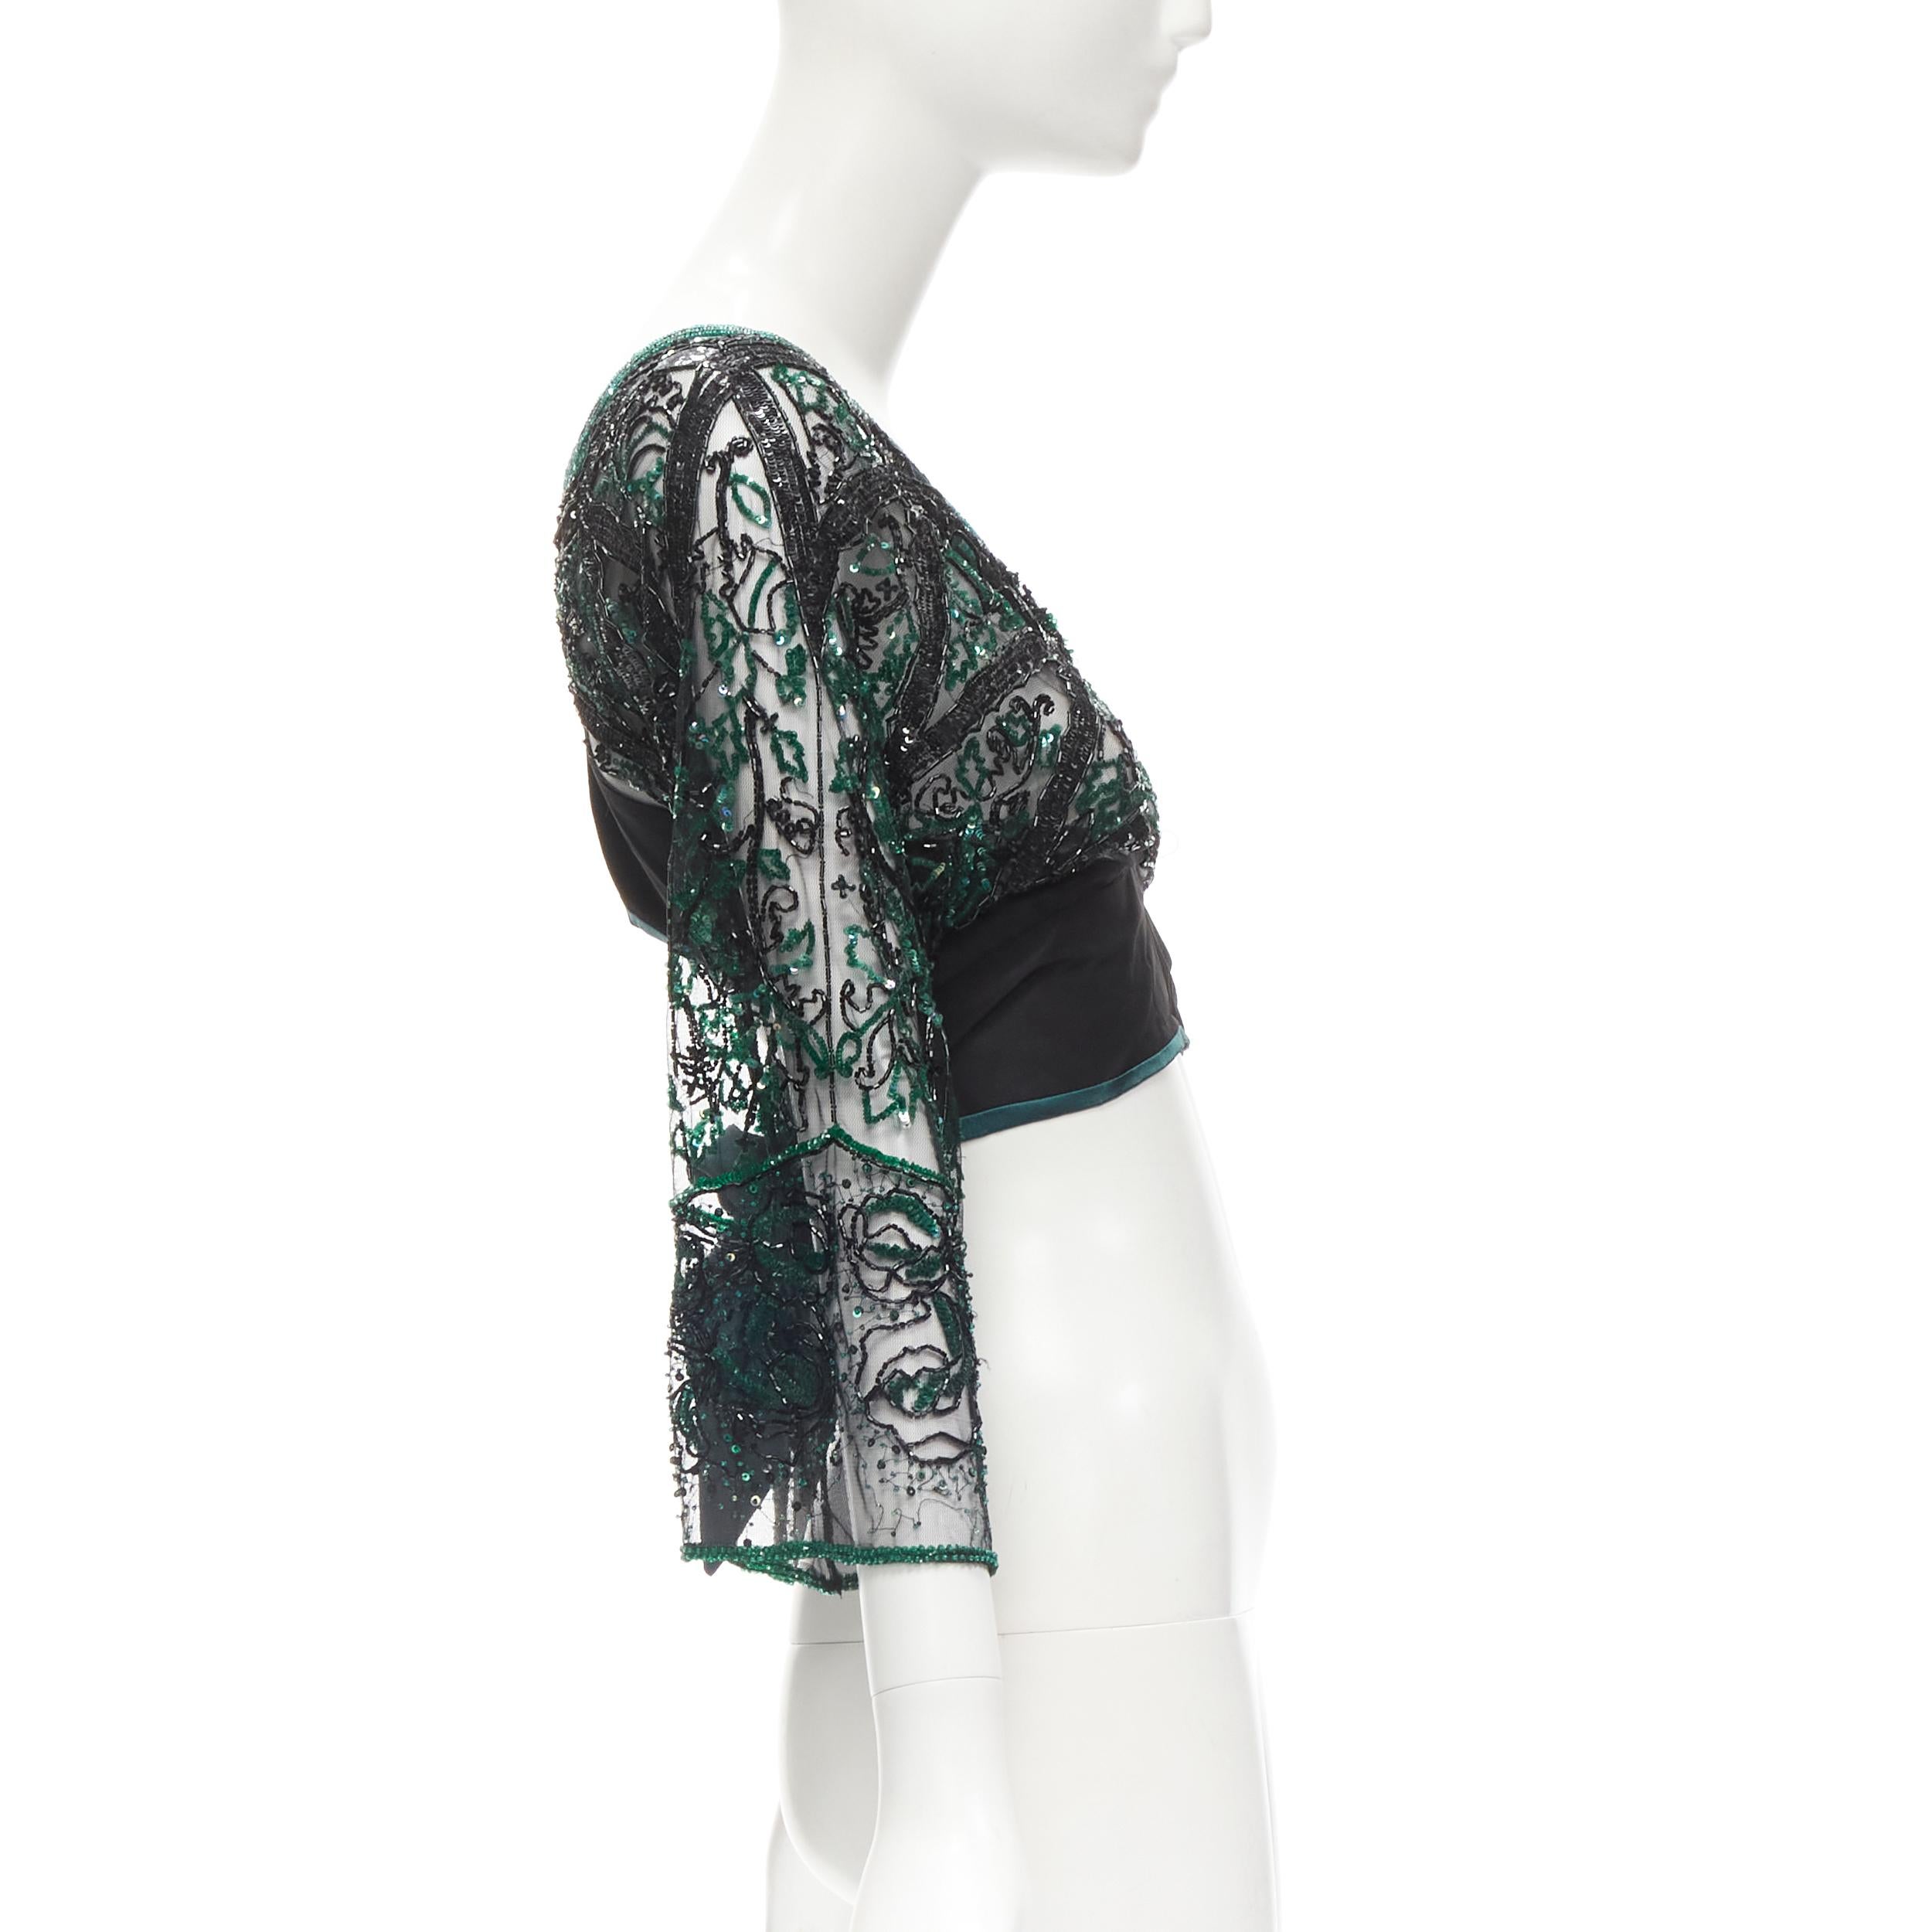 Women's ANTONIO MARRAS green black fully sequins bead embellished wrap sheer top